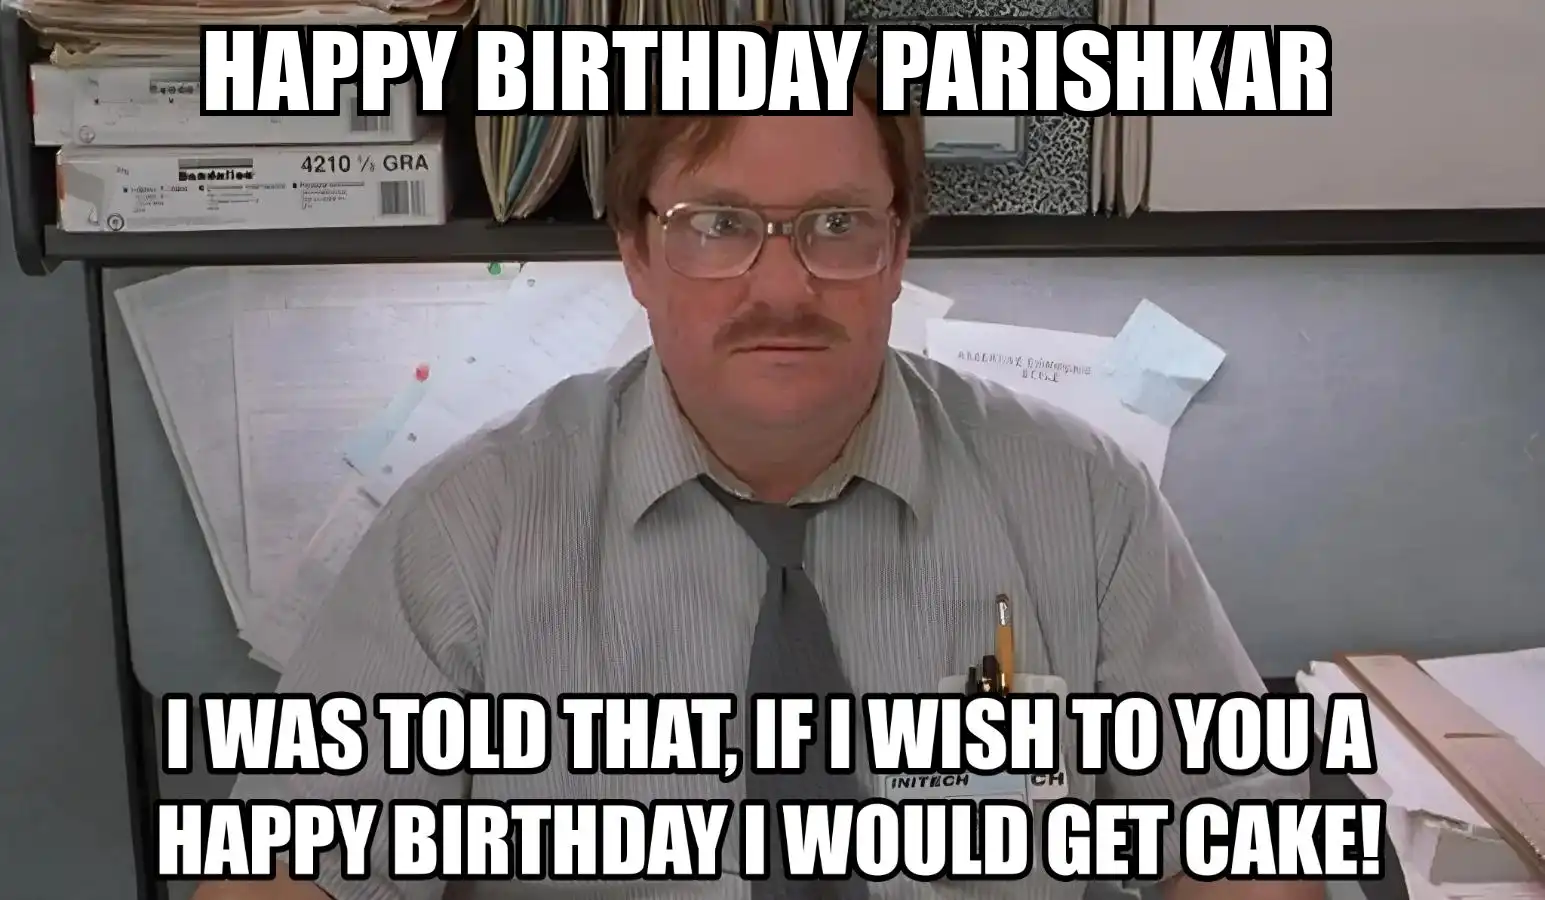 Happy Birthday Parishkar I Would Get A Cake Meme